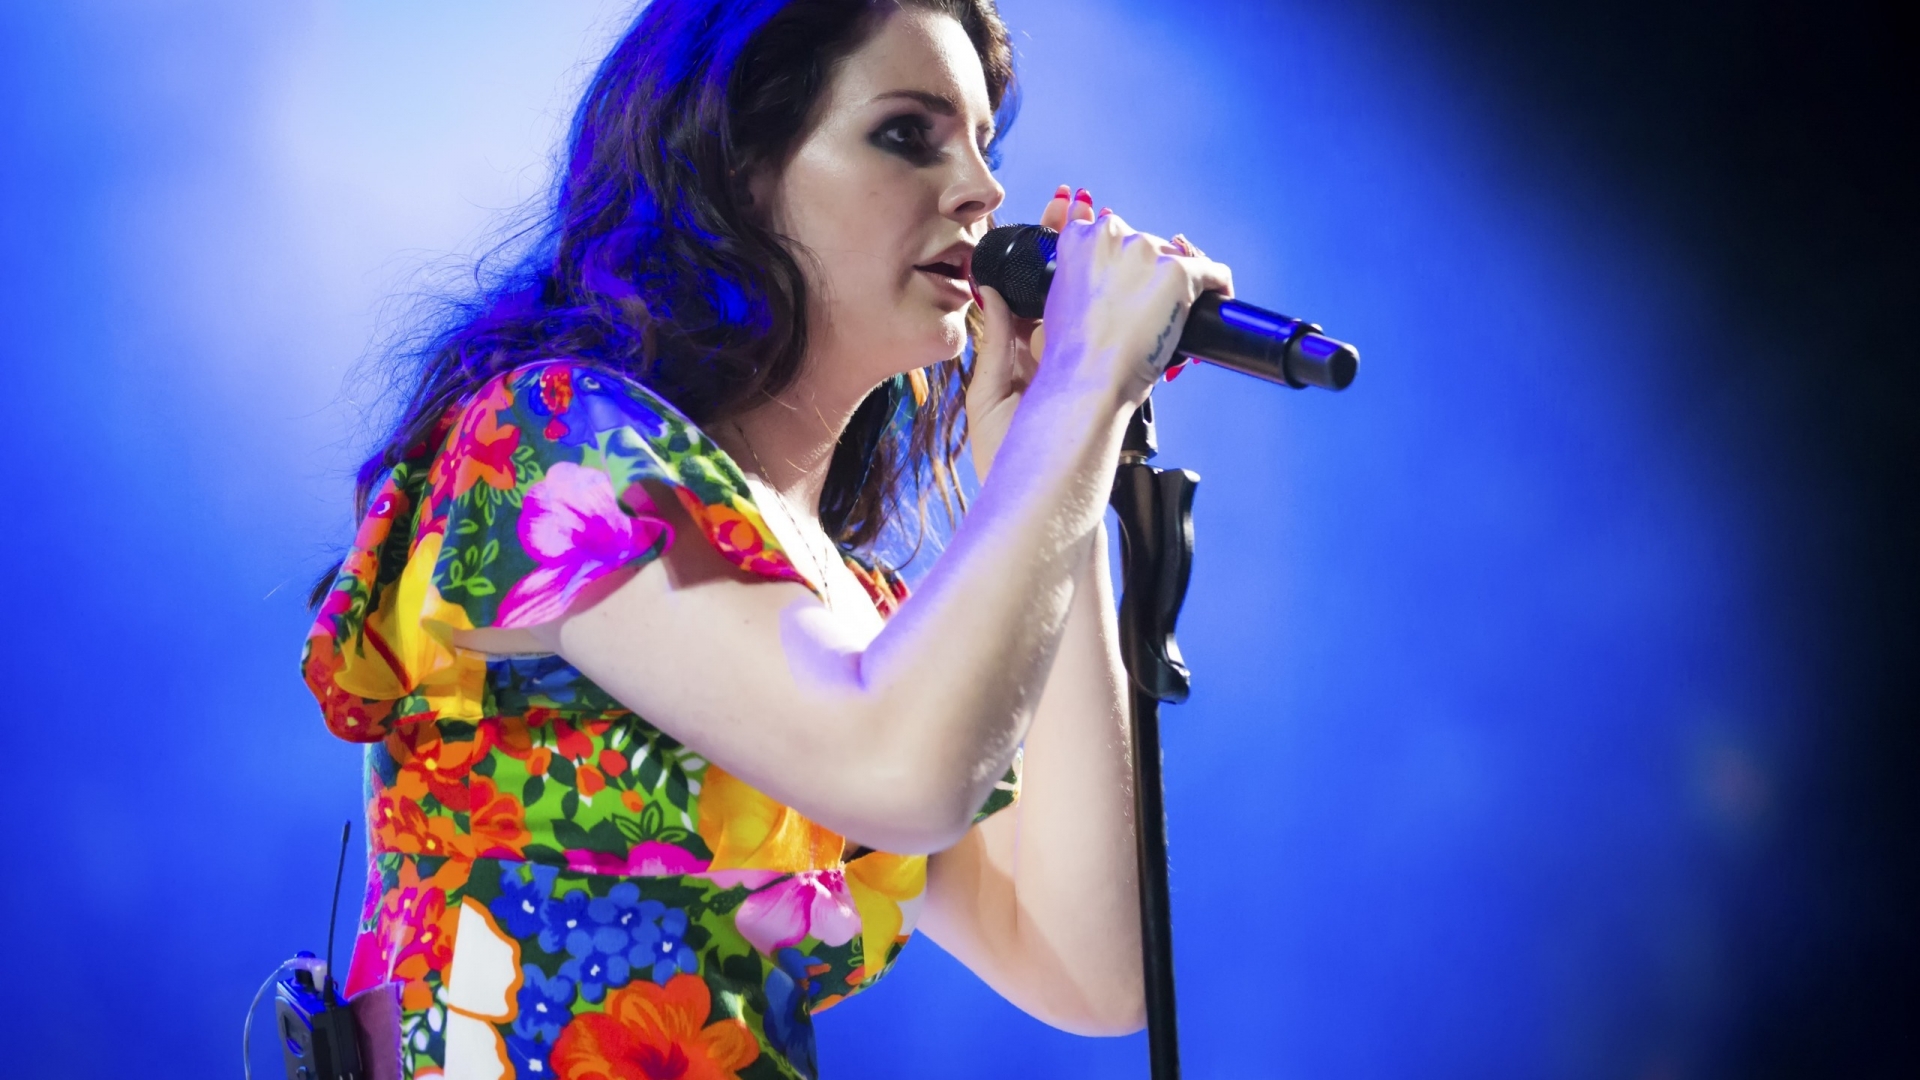 Lana Del Rey Performing Coachella for 1920 x 1080 HDTV 1080p resolution